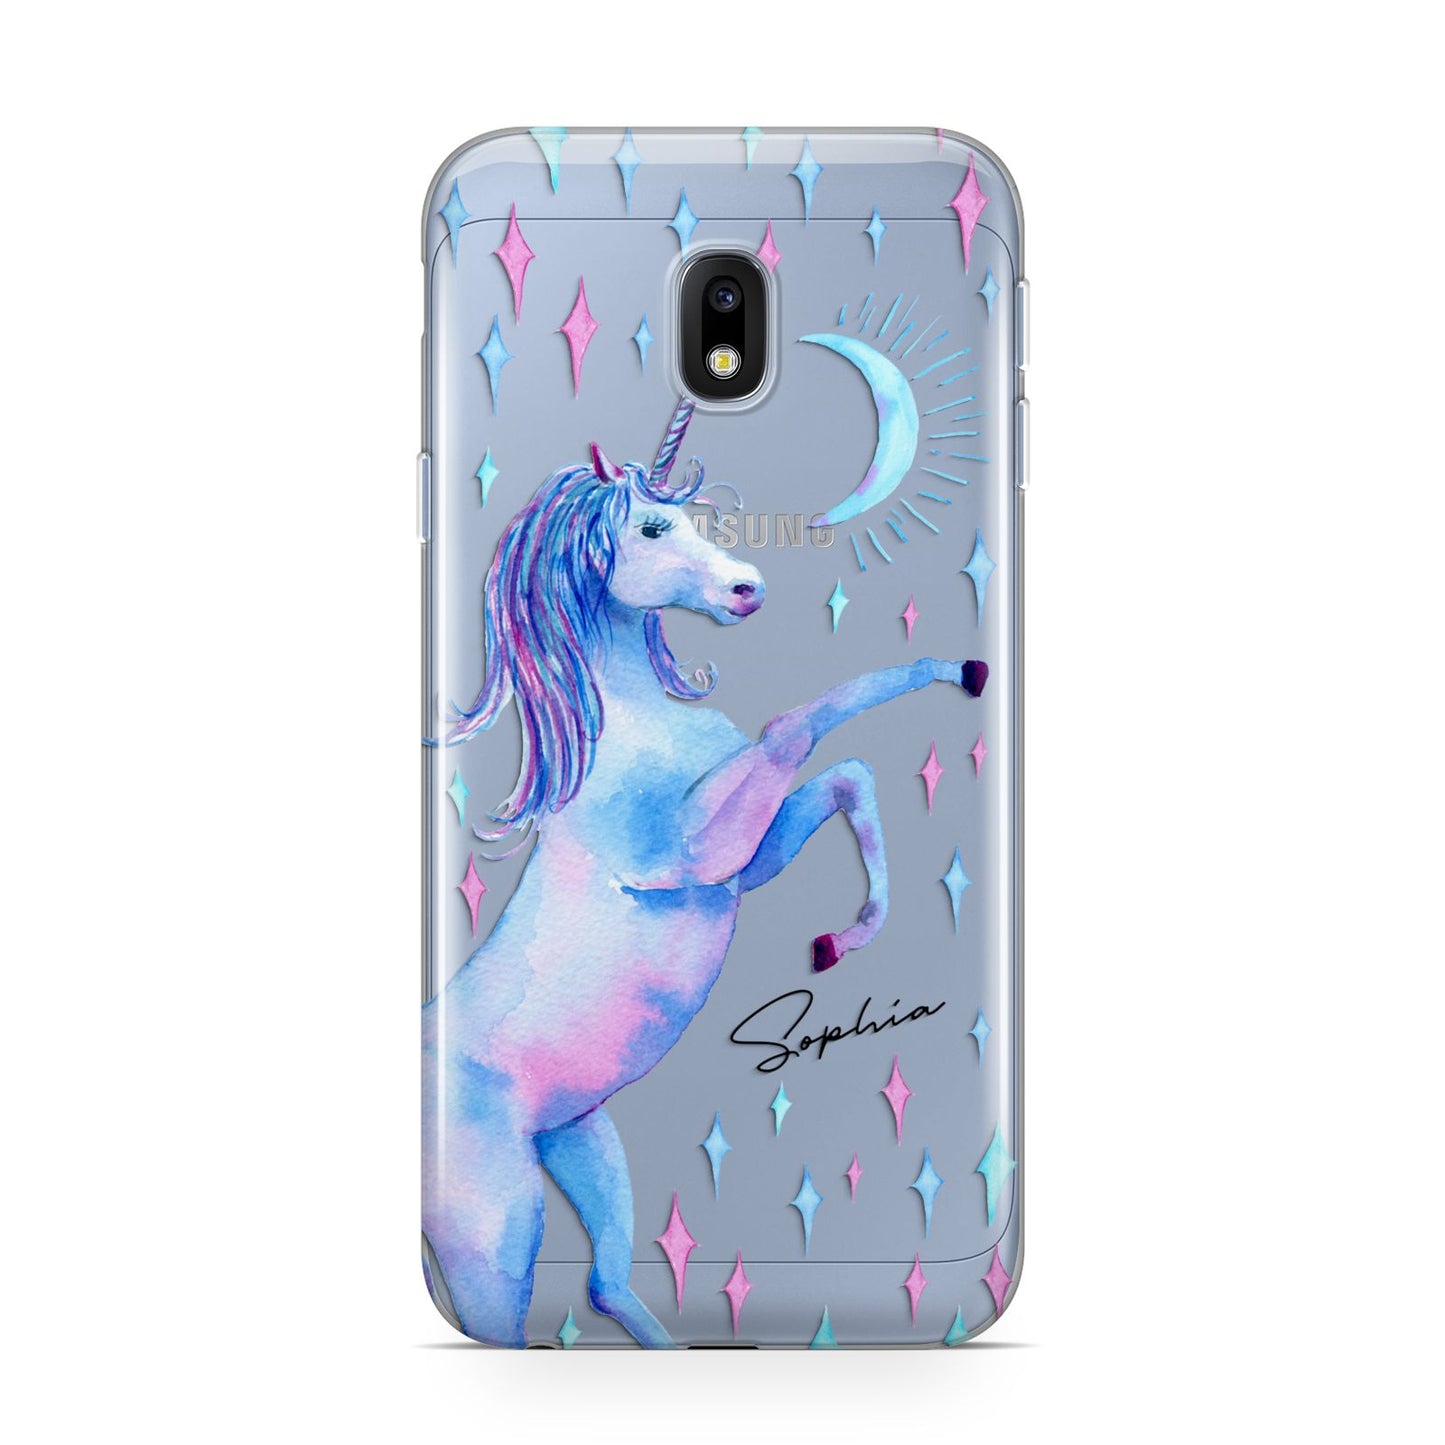 Personalised Unicorn Name Samsung Galaxy J3 2017 Case